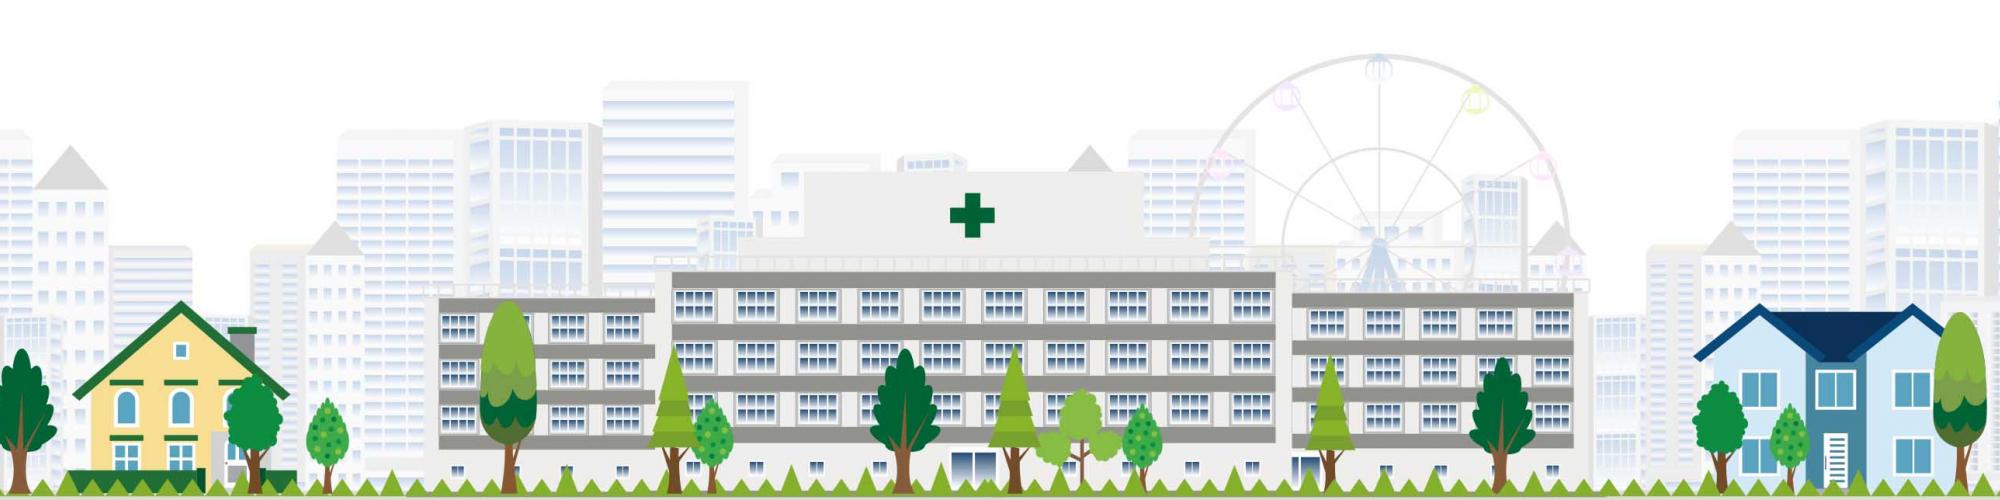 Altmark-Klinikum gGmbH Krankenhaus Salzwedel